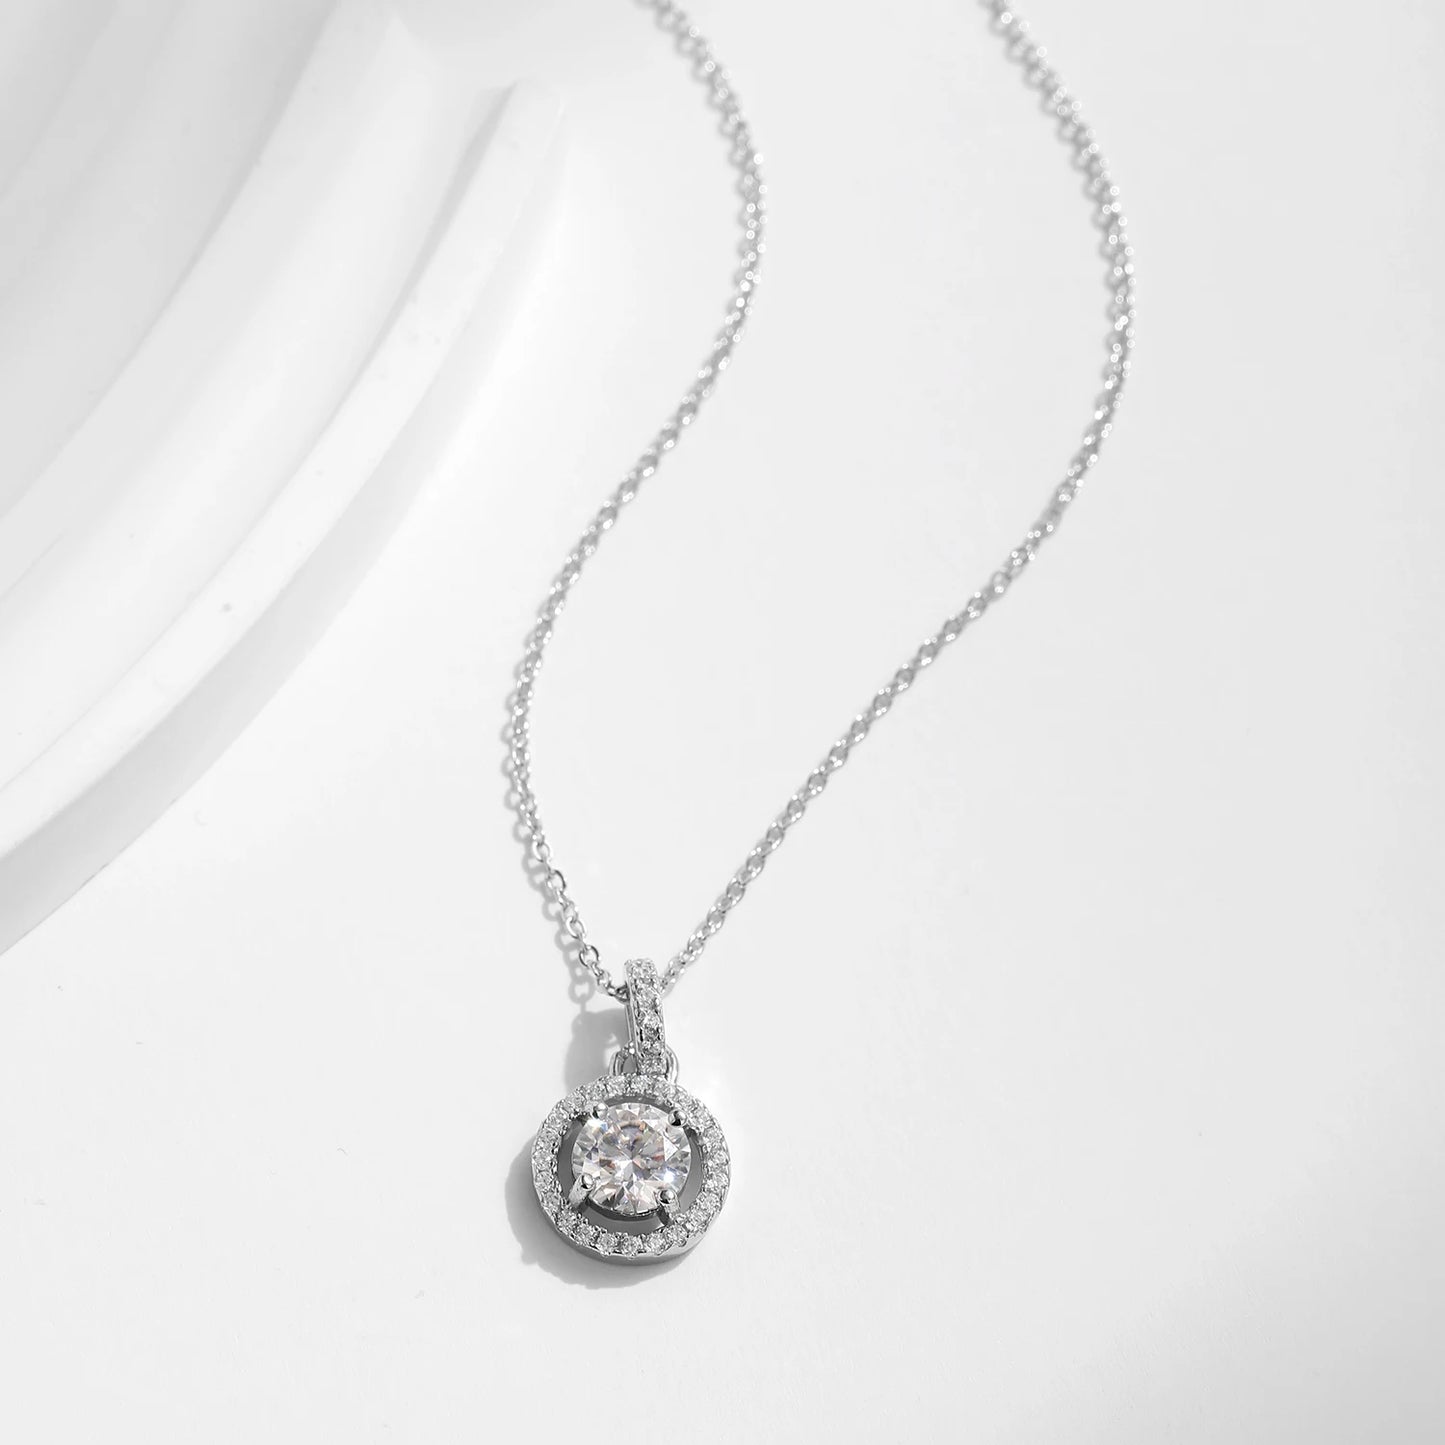 Celestial Glow: 925 Sterling Silver 1 Carat D Color Moissanite Pendant Necklace